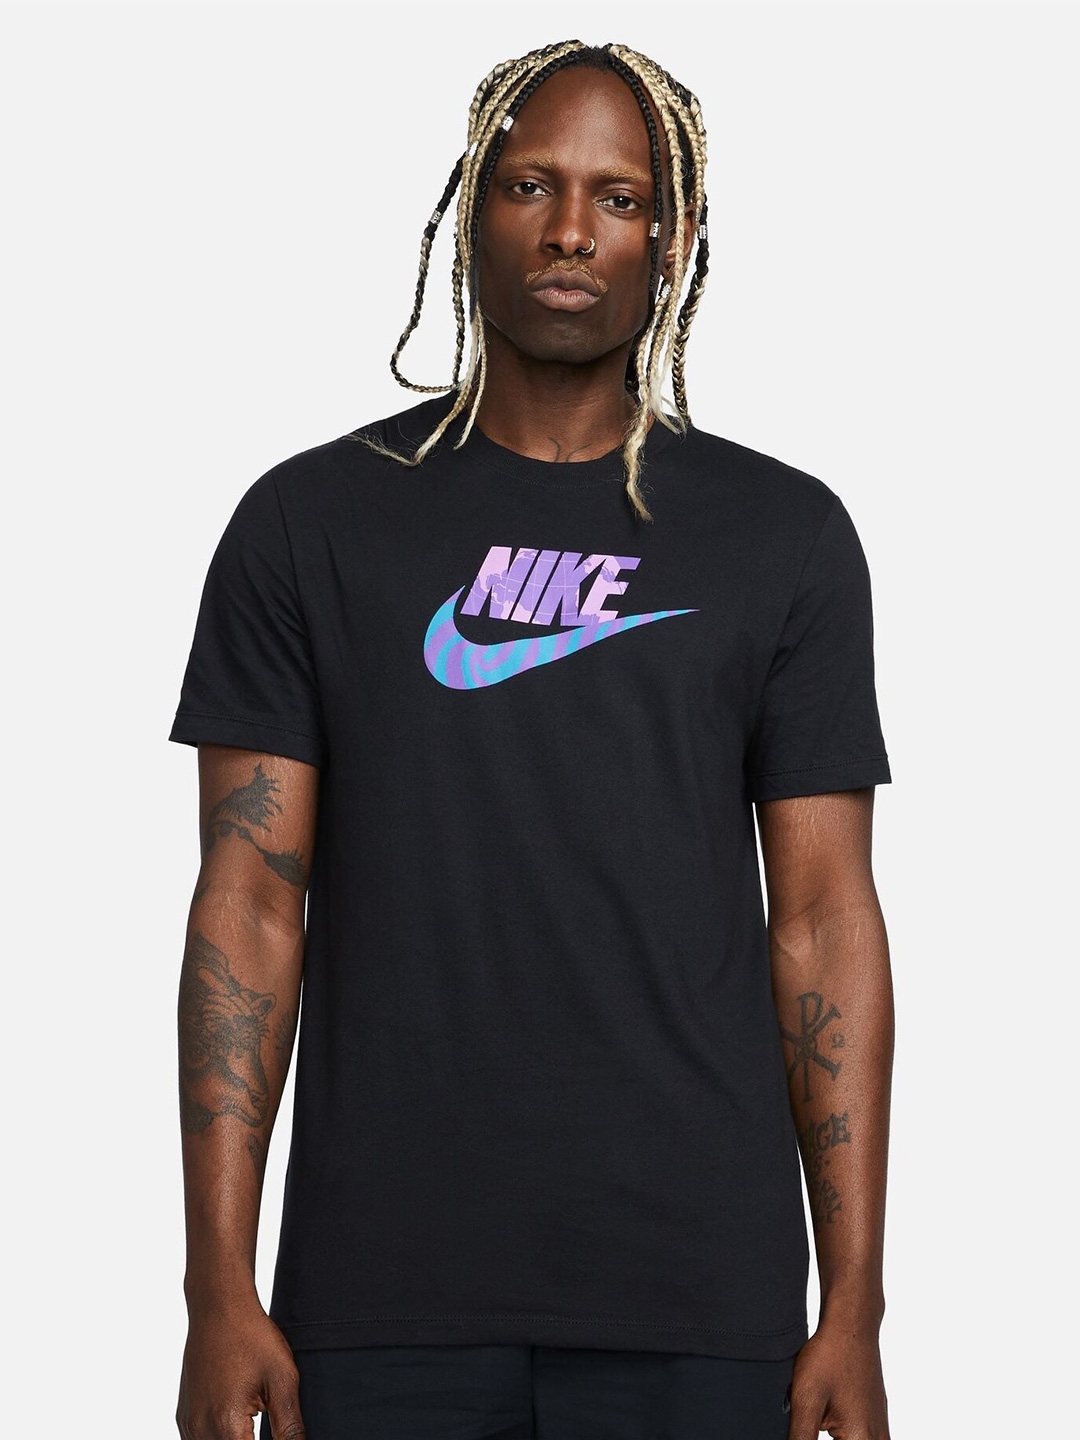 Buy Nike Round Neck Tshirts - Tshirts for Men 24802832 | Myntra